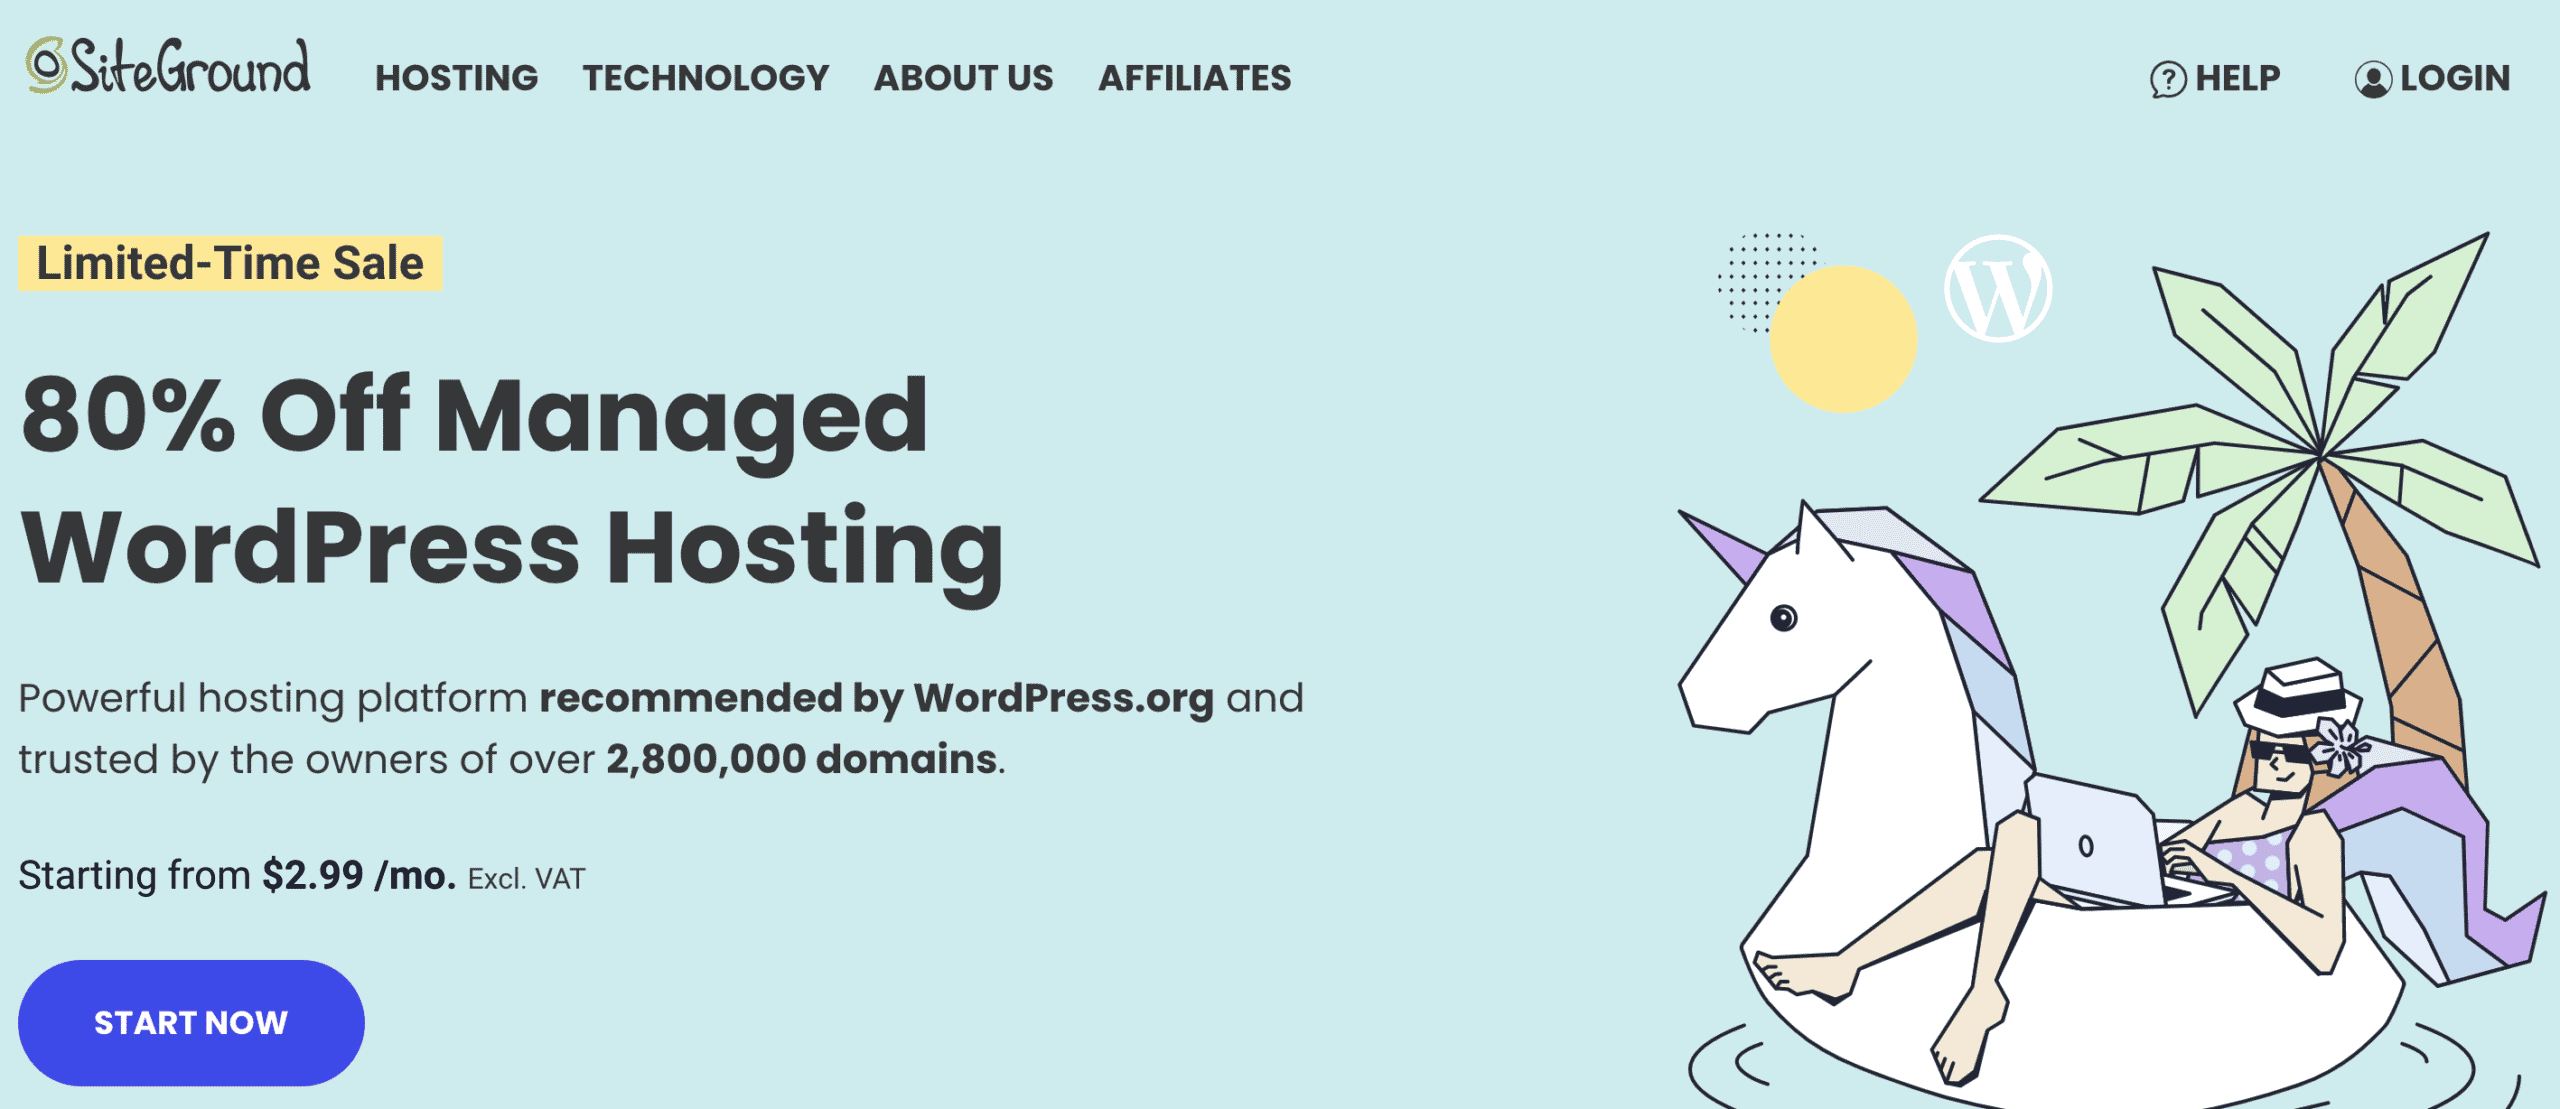 SiteGround cheap WordPress hosting starts at $2.99/month